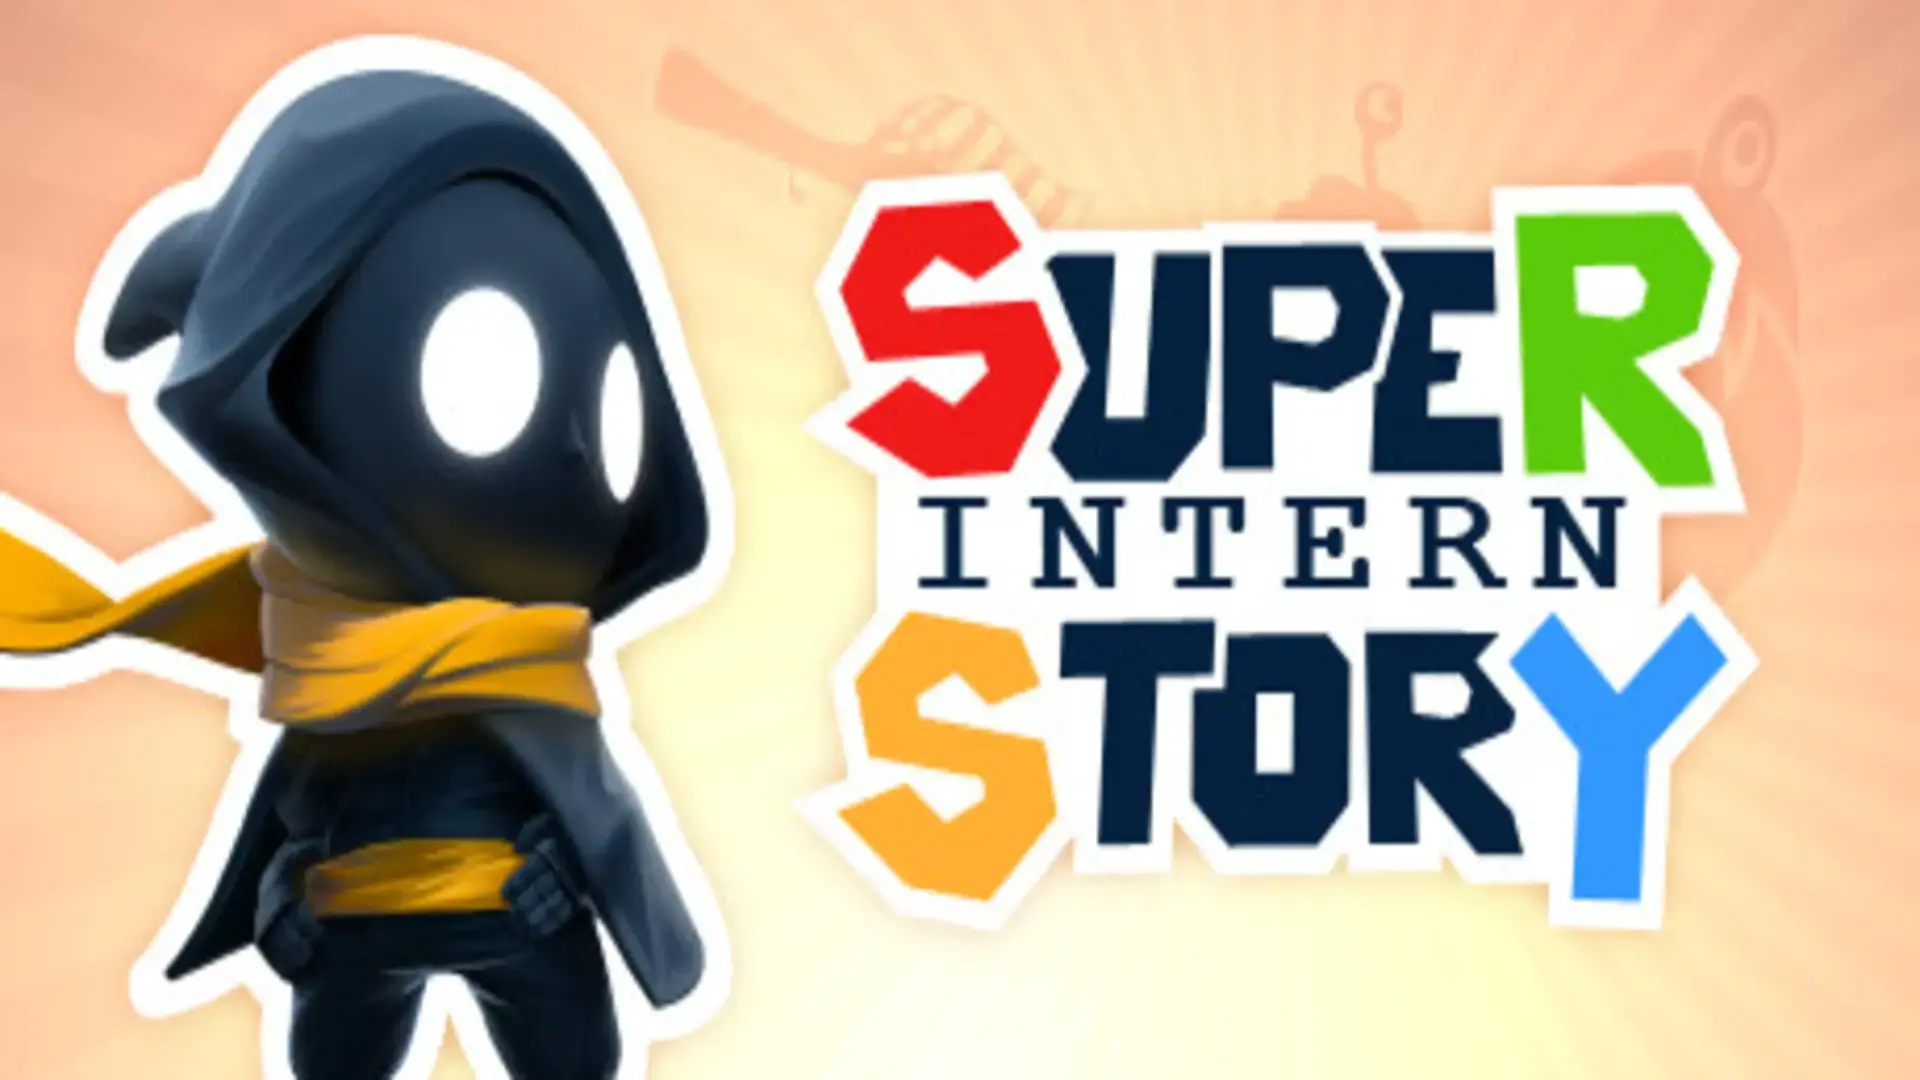 Super Intern Story – Free Download (Build 11781620)